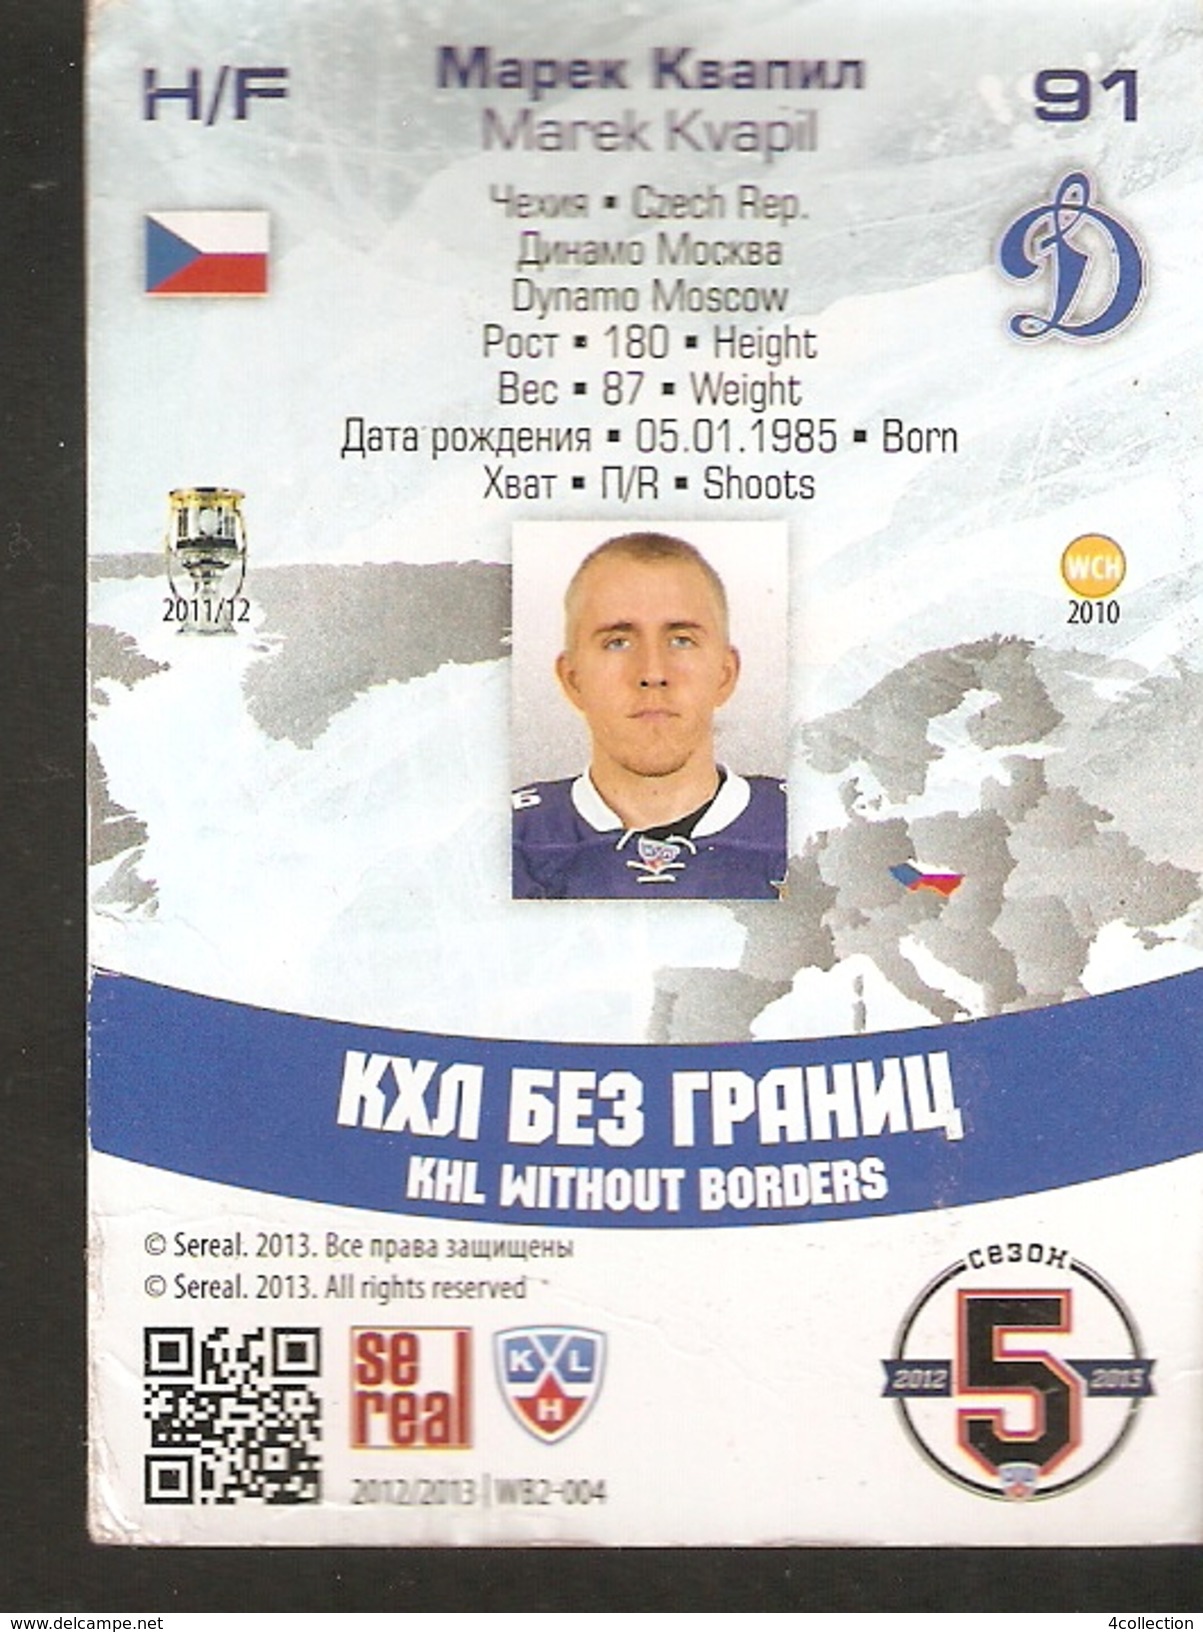 Hockey Sport Collectibles KHL Se Real Card MAREK KVAPIL H/F #91 CZECH Rep. DYNAMO Moscow 5th Season 2012-2013 - 2000-Now